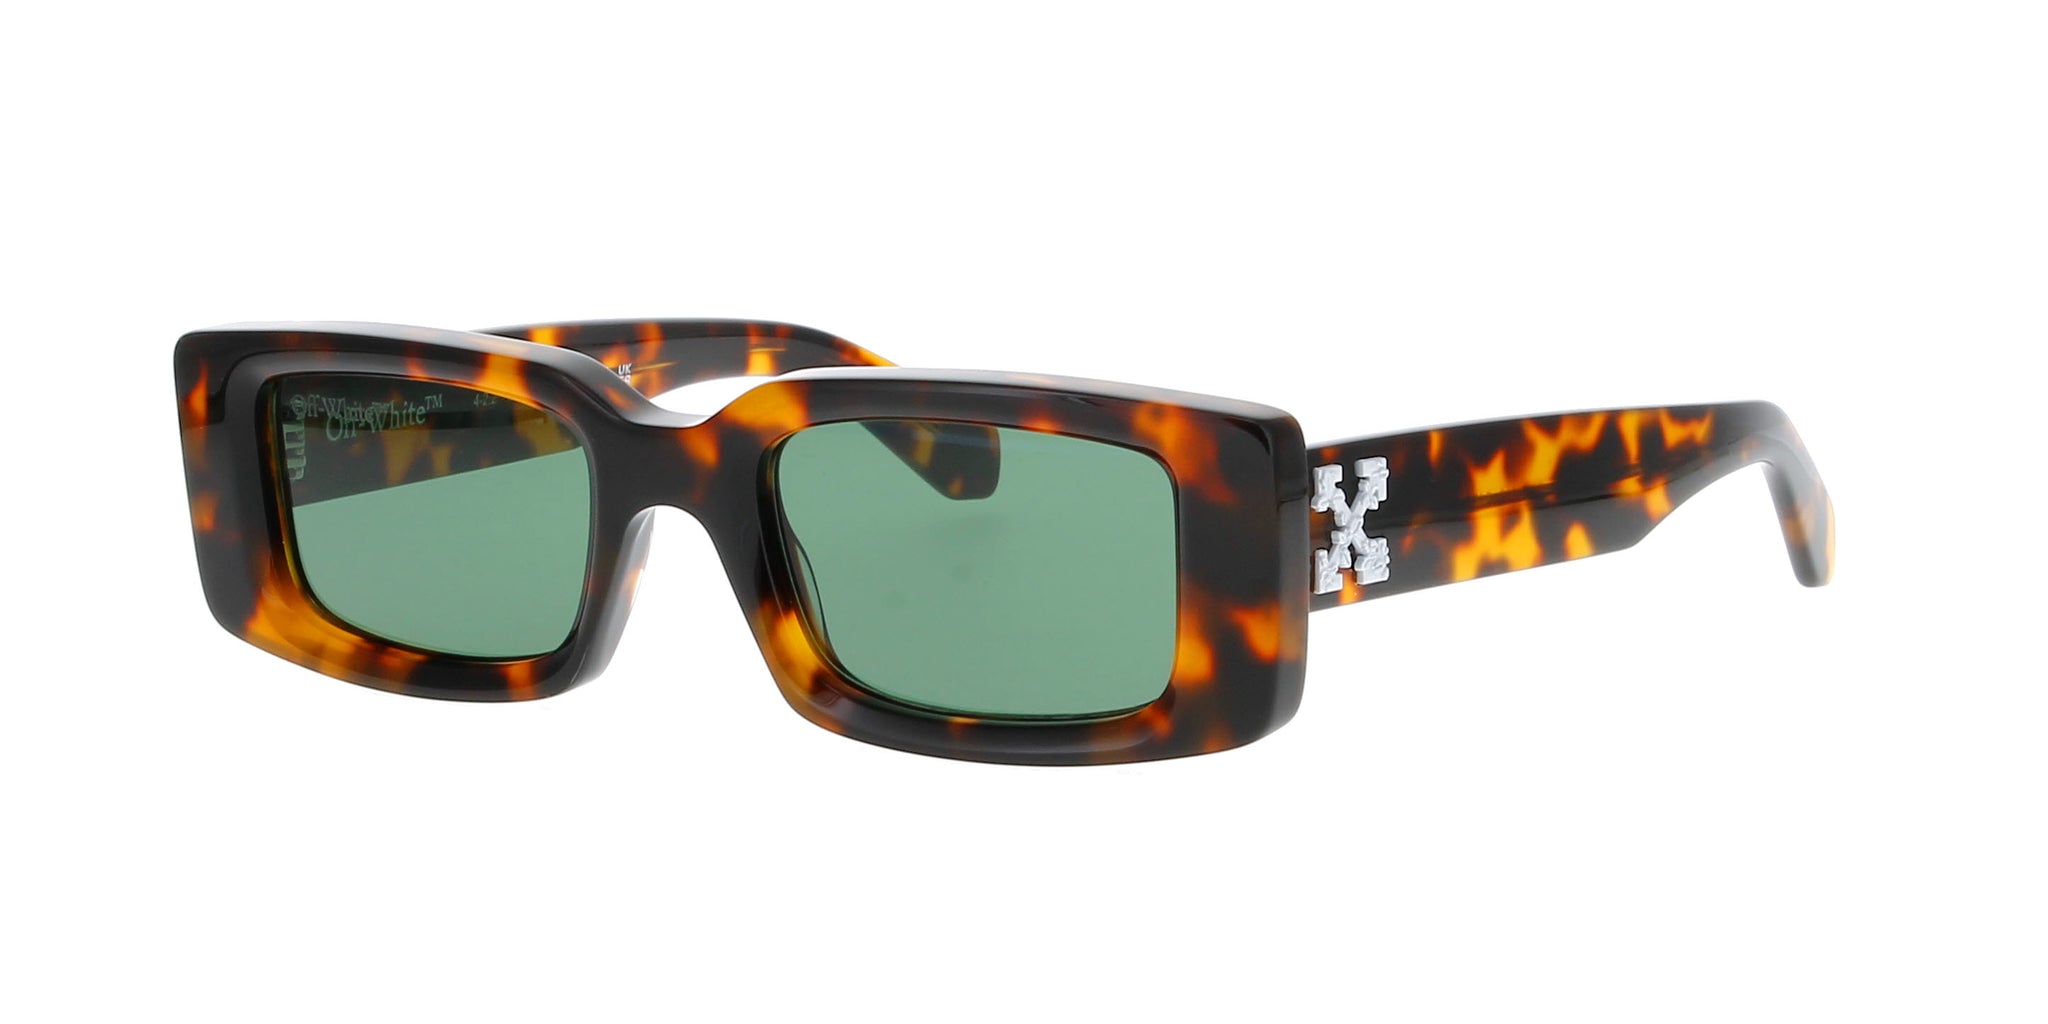 New! OFF-WHITE Sunglasses OERI026 0107, Authentic